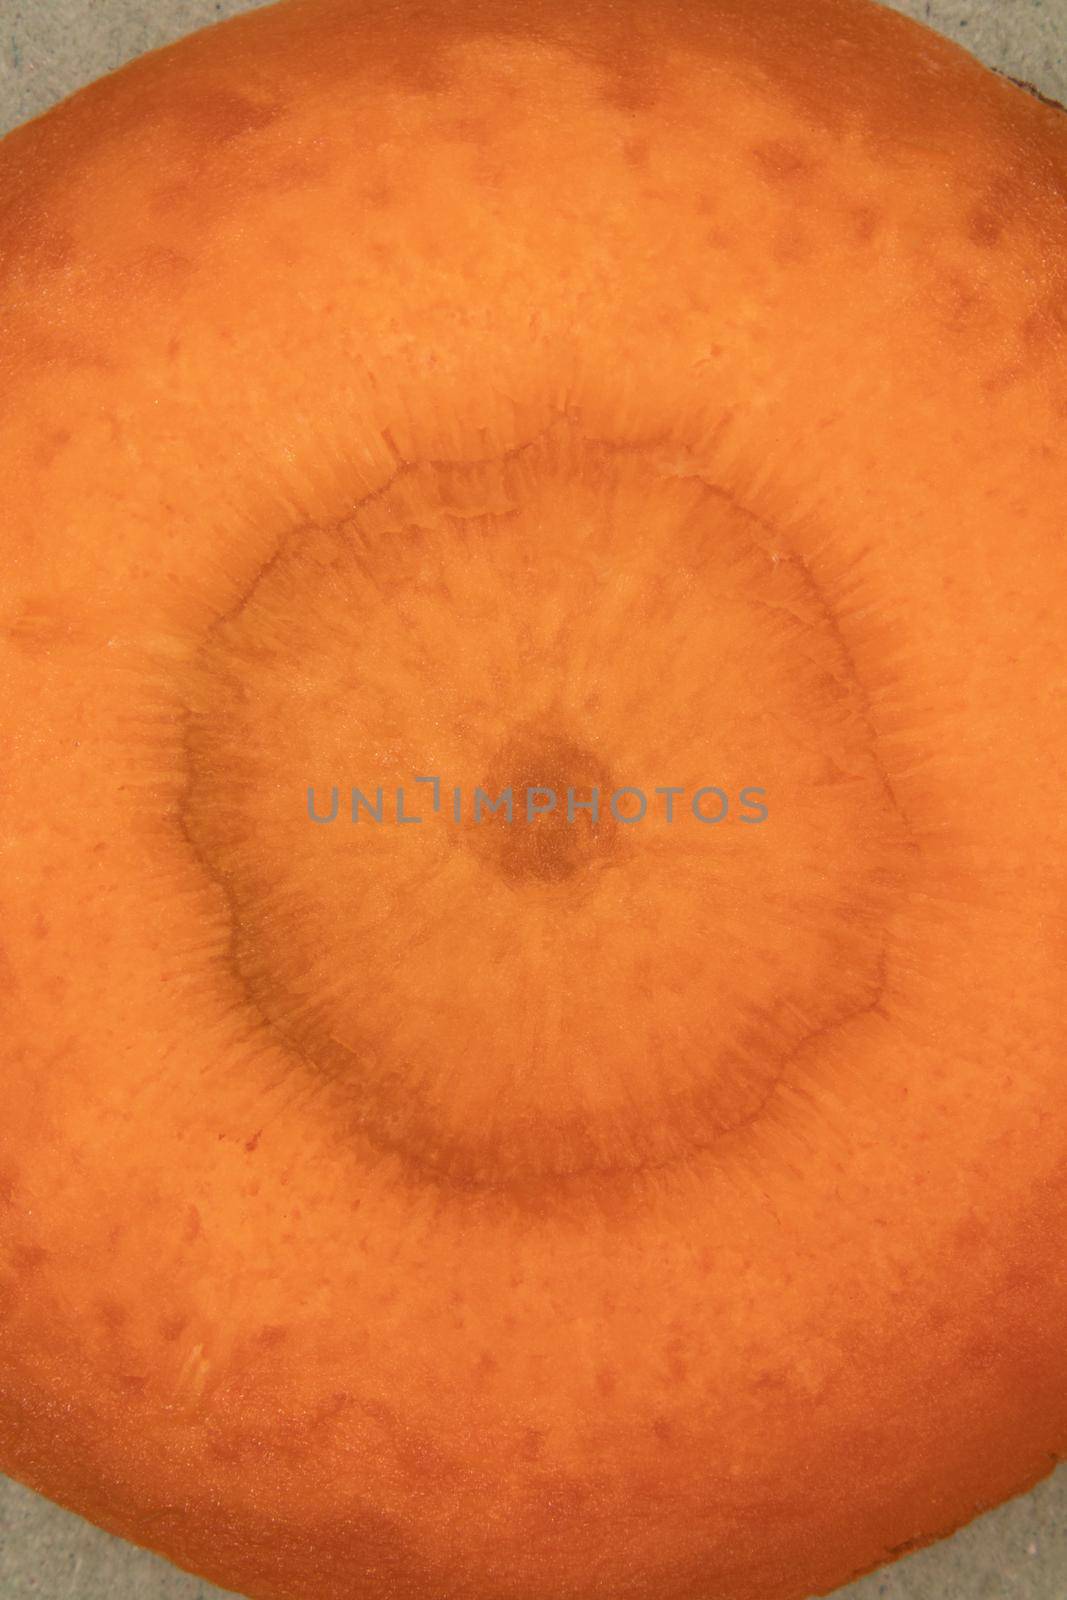 orange carrot slice under the microscope